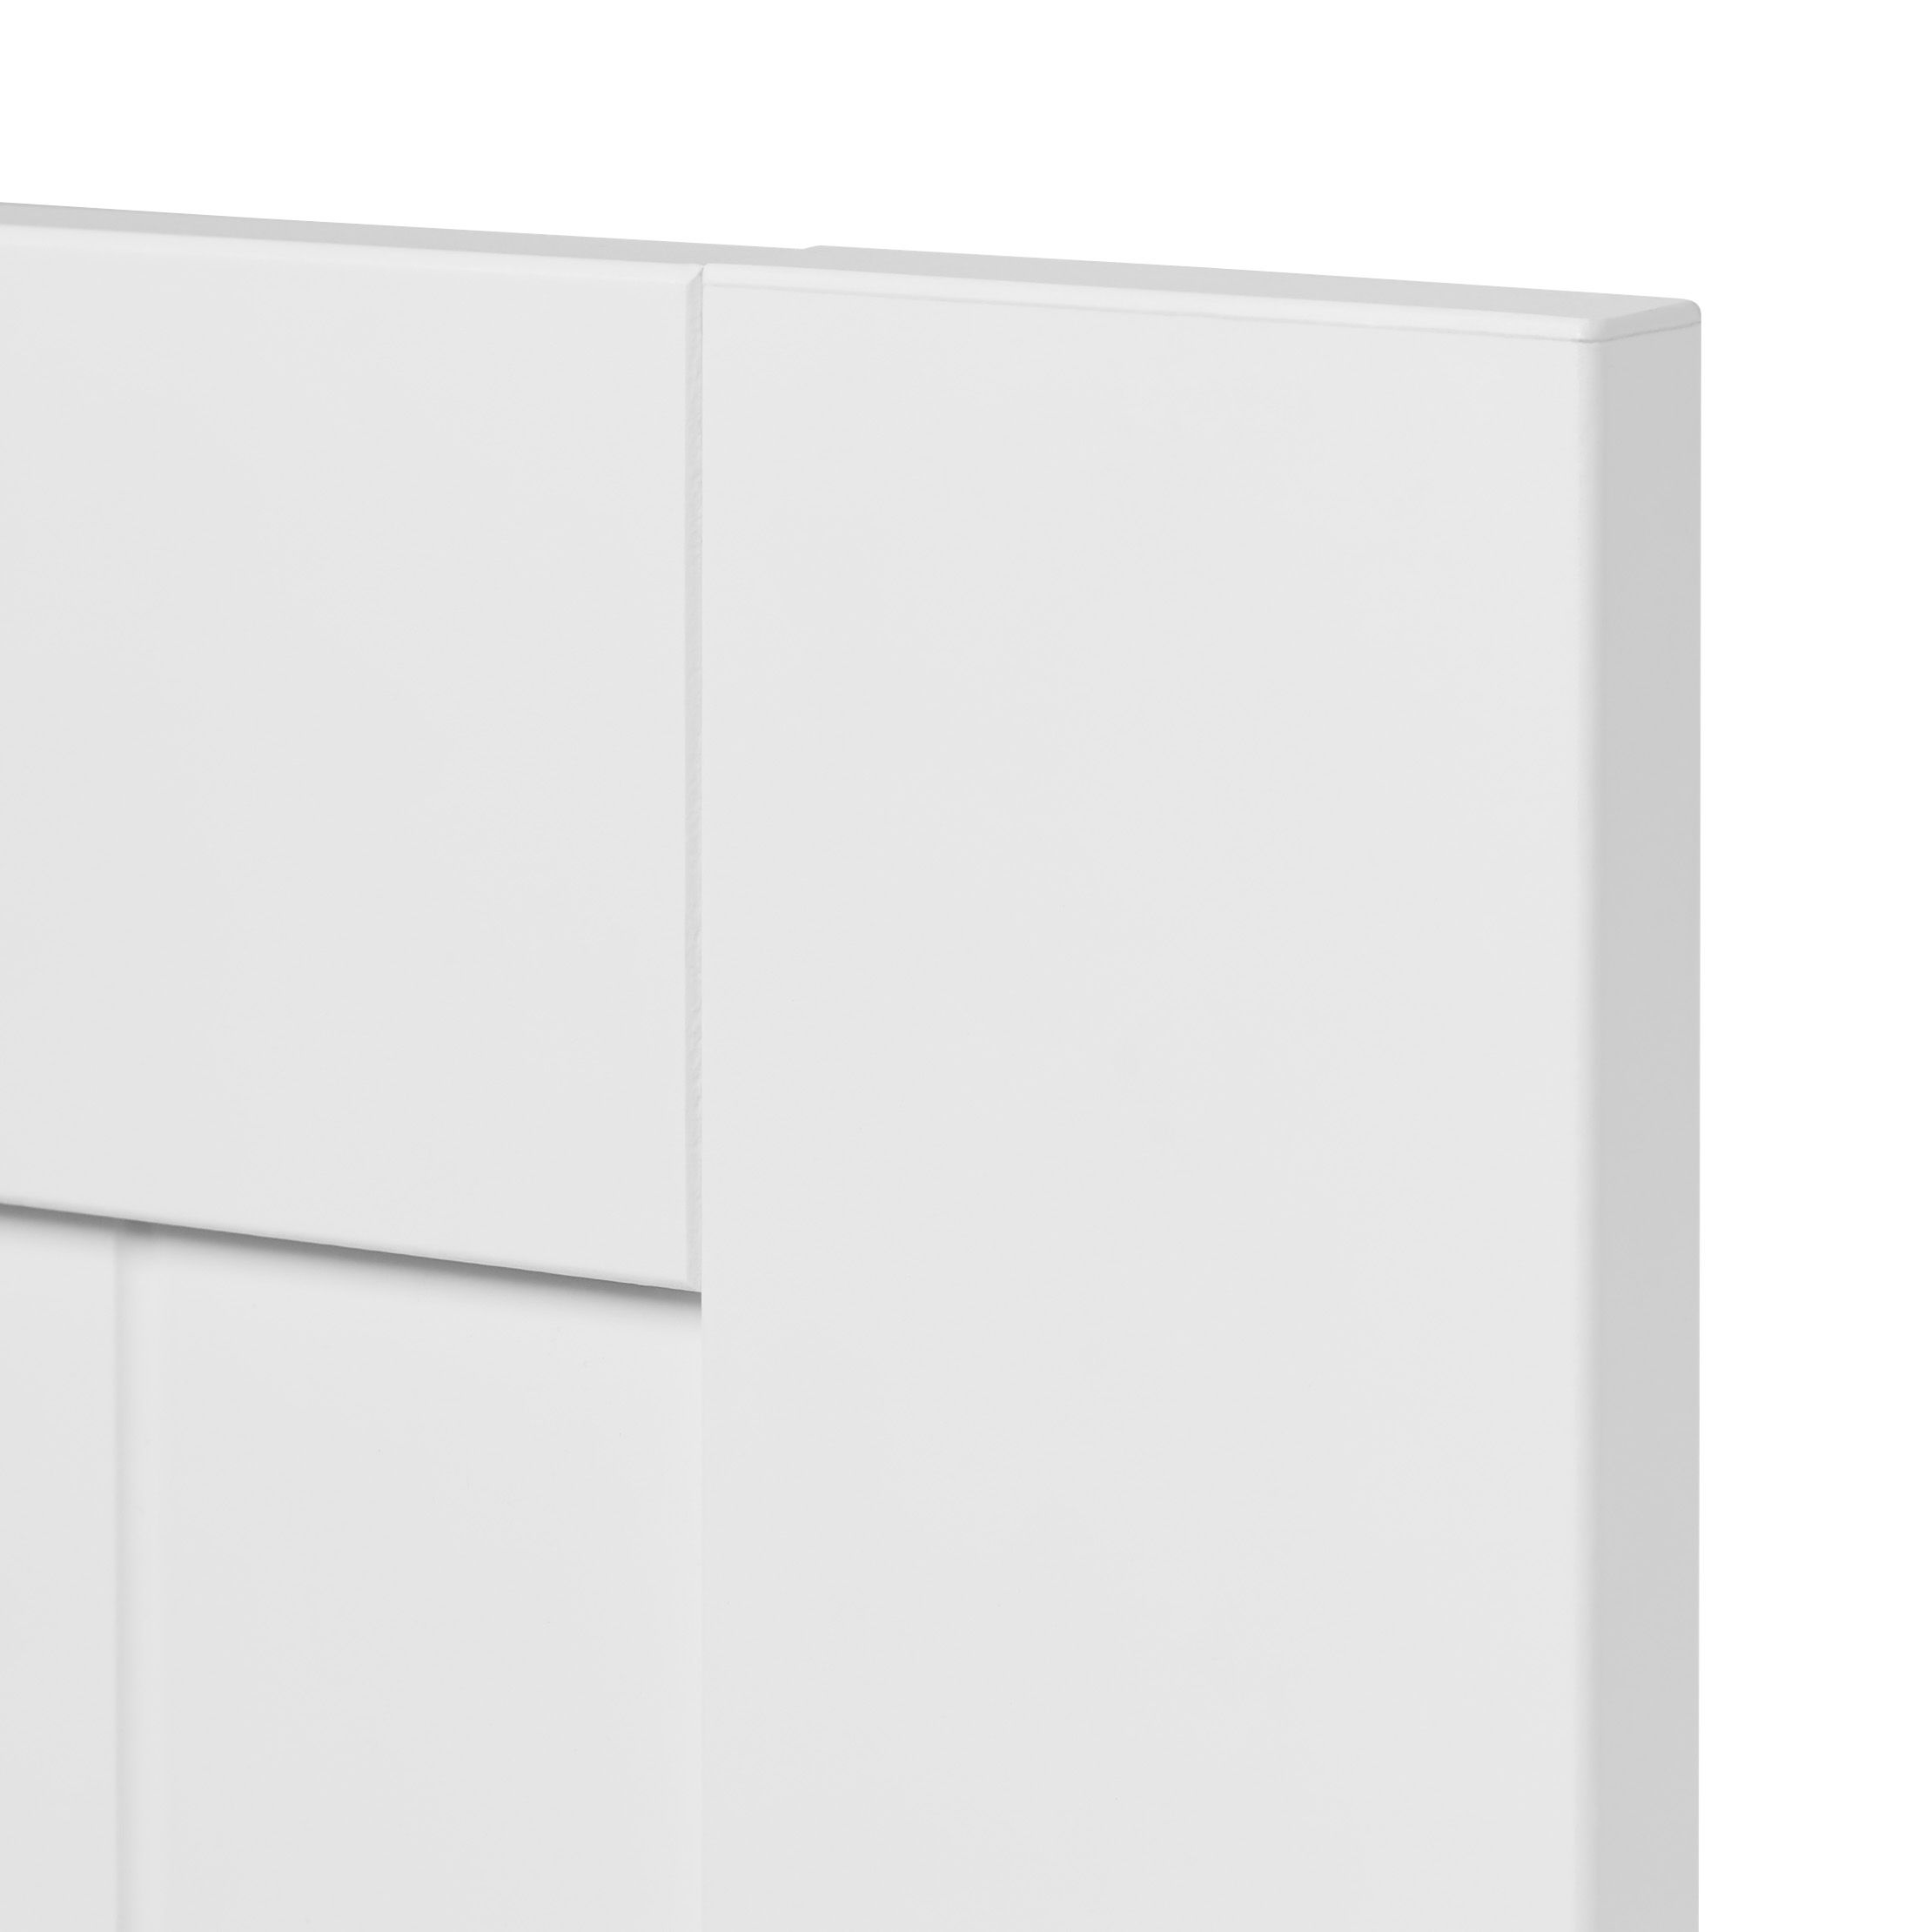 GoodHome Alpinia Matt white tongue & groove shaker Tall appliance Cabinet door (W)600mm (H)723mm (T)18mm